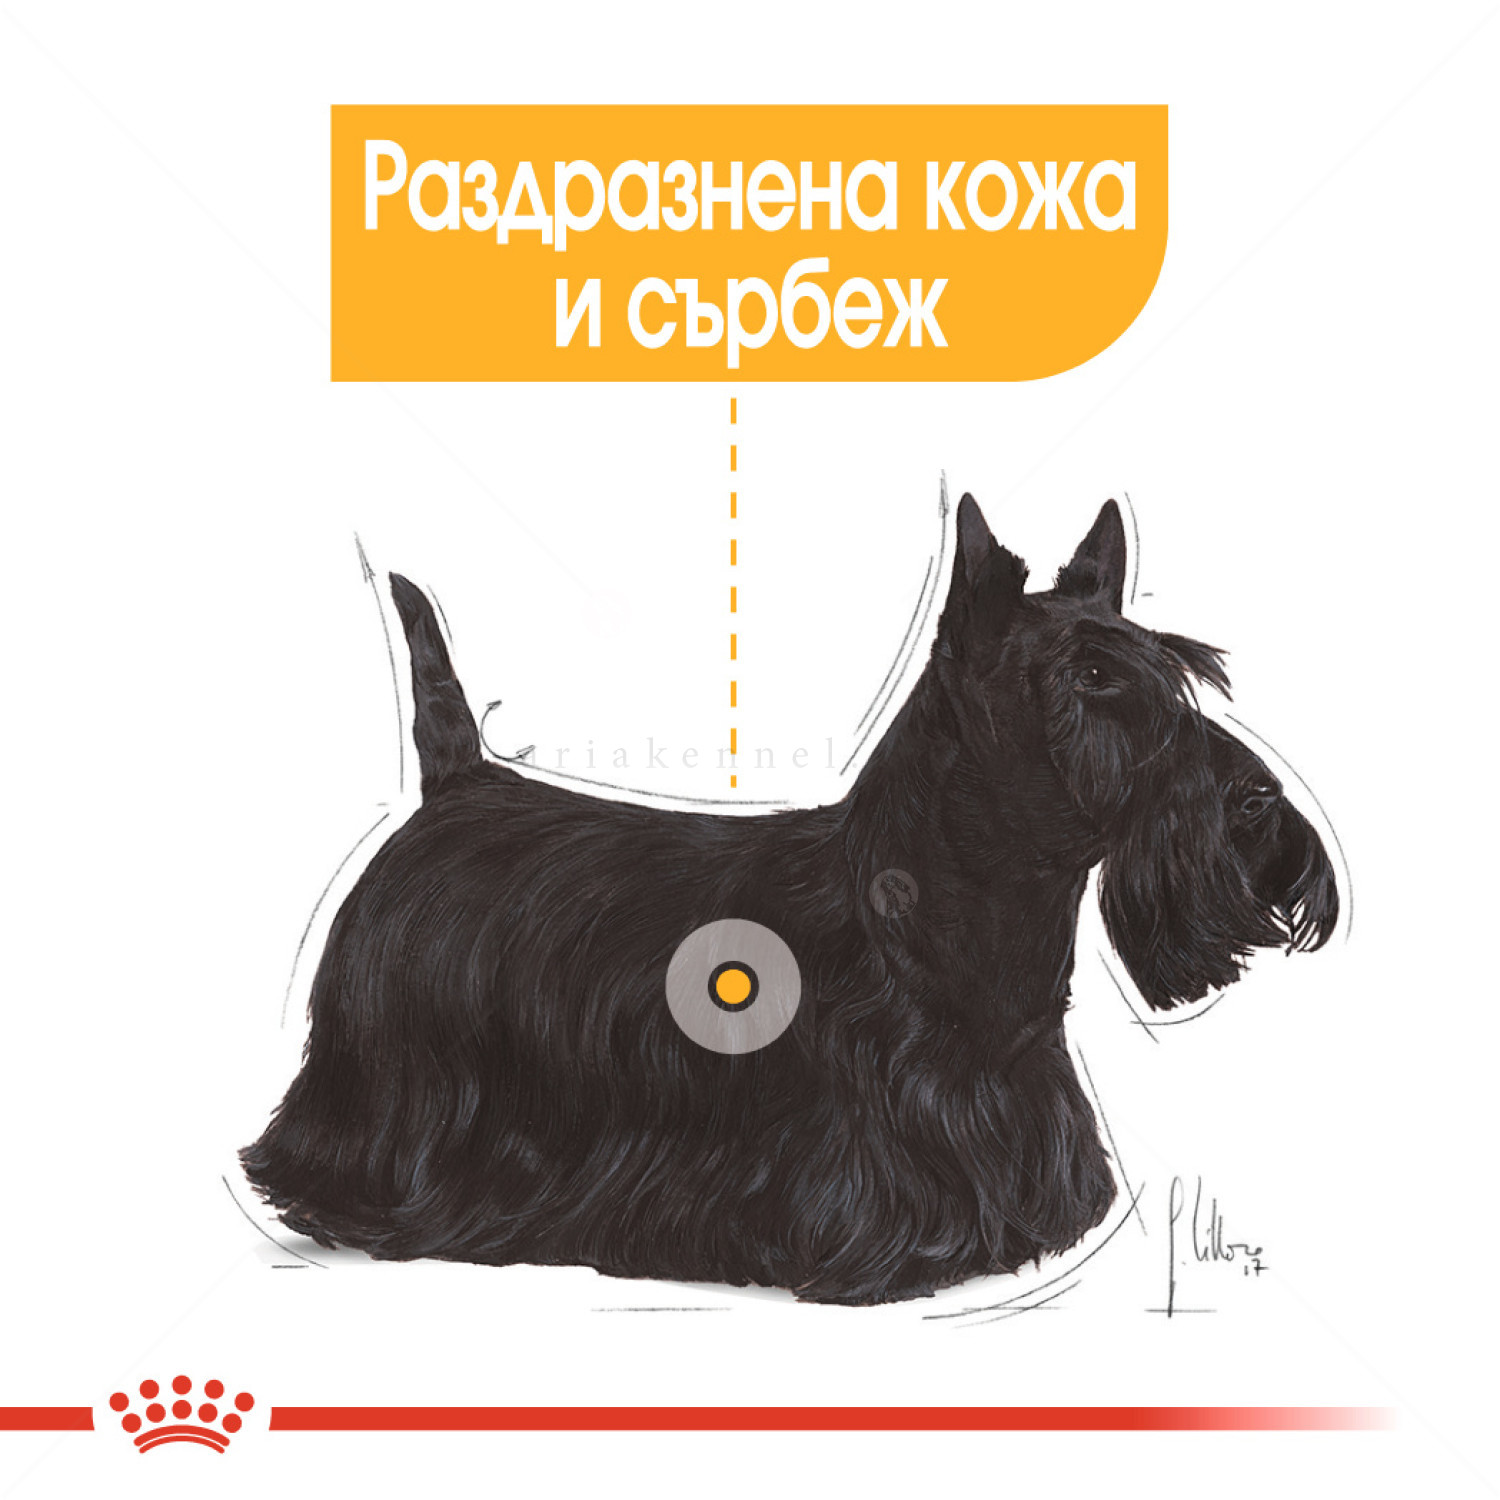 ROYAL CANIN Mini Dermacomfort - 3 кг